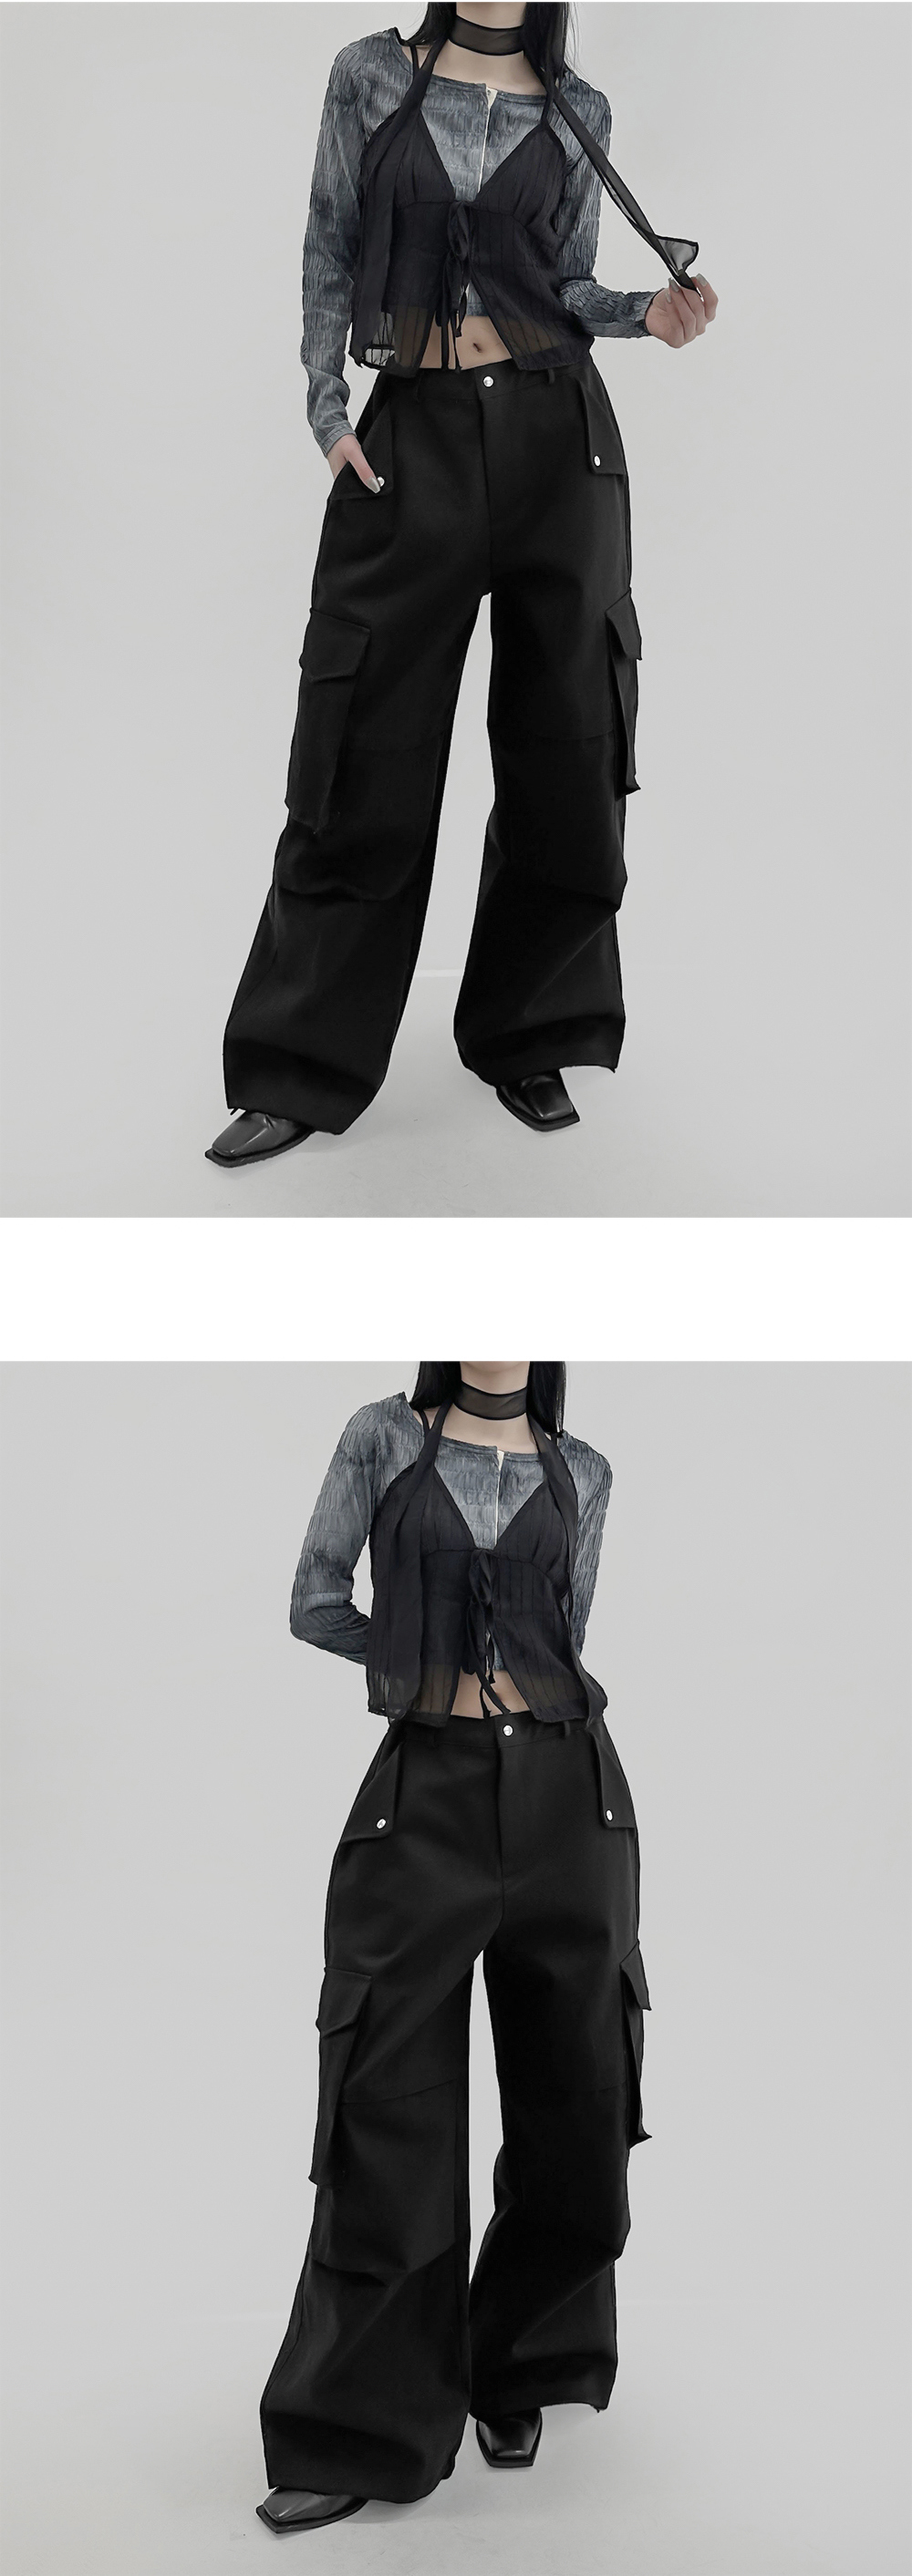 suspenders skirt/pants charcoal color image-S1L3